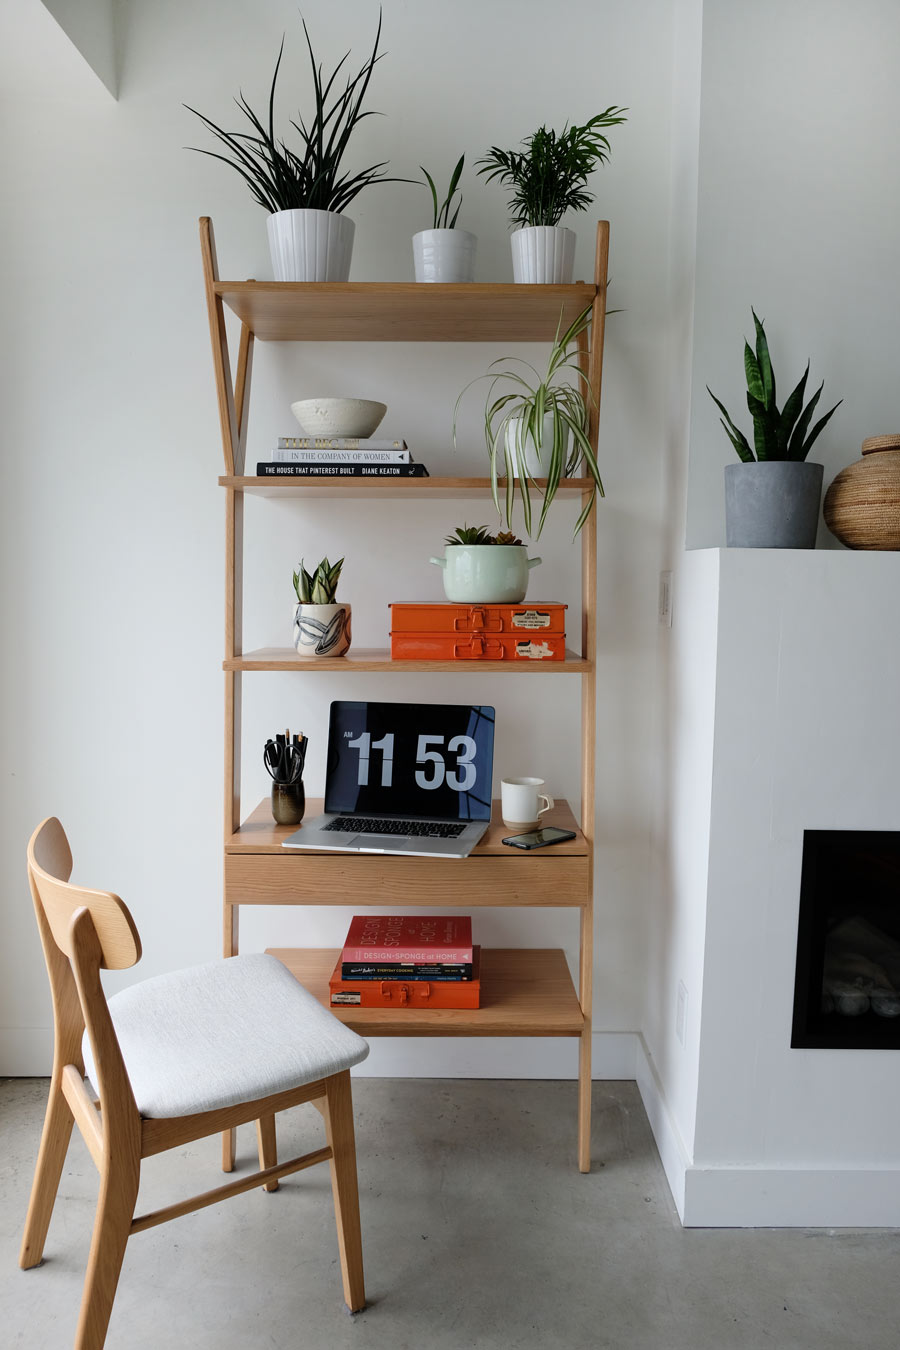 Storage ideas for small spaces - Article Lignum Shelf @visualheart